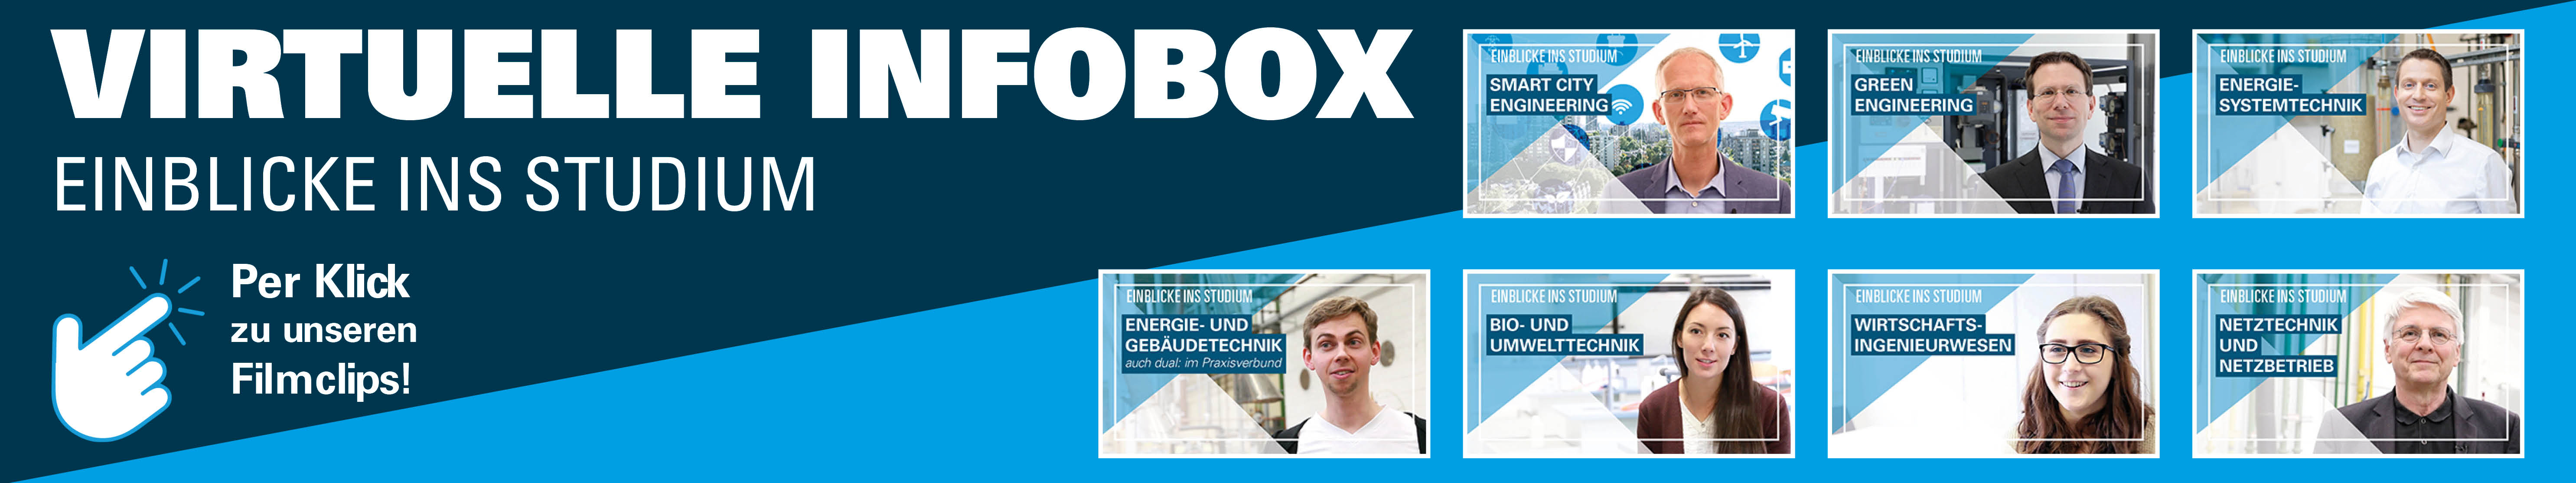 Virtuelle Infobox